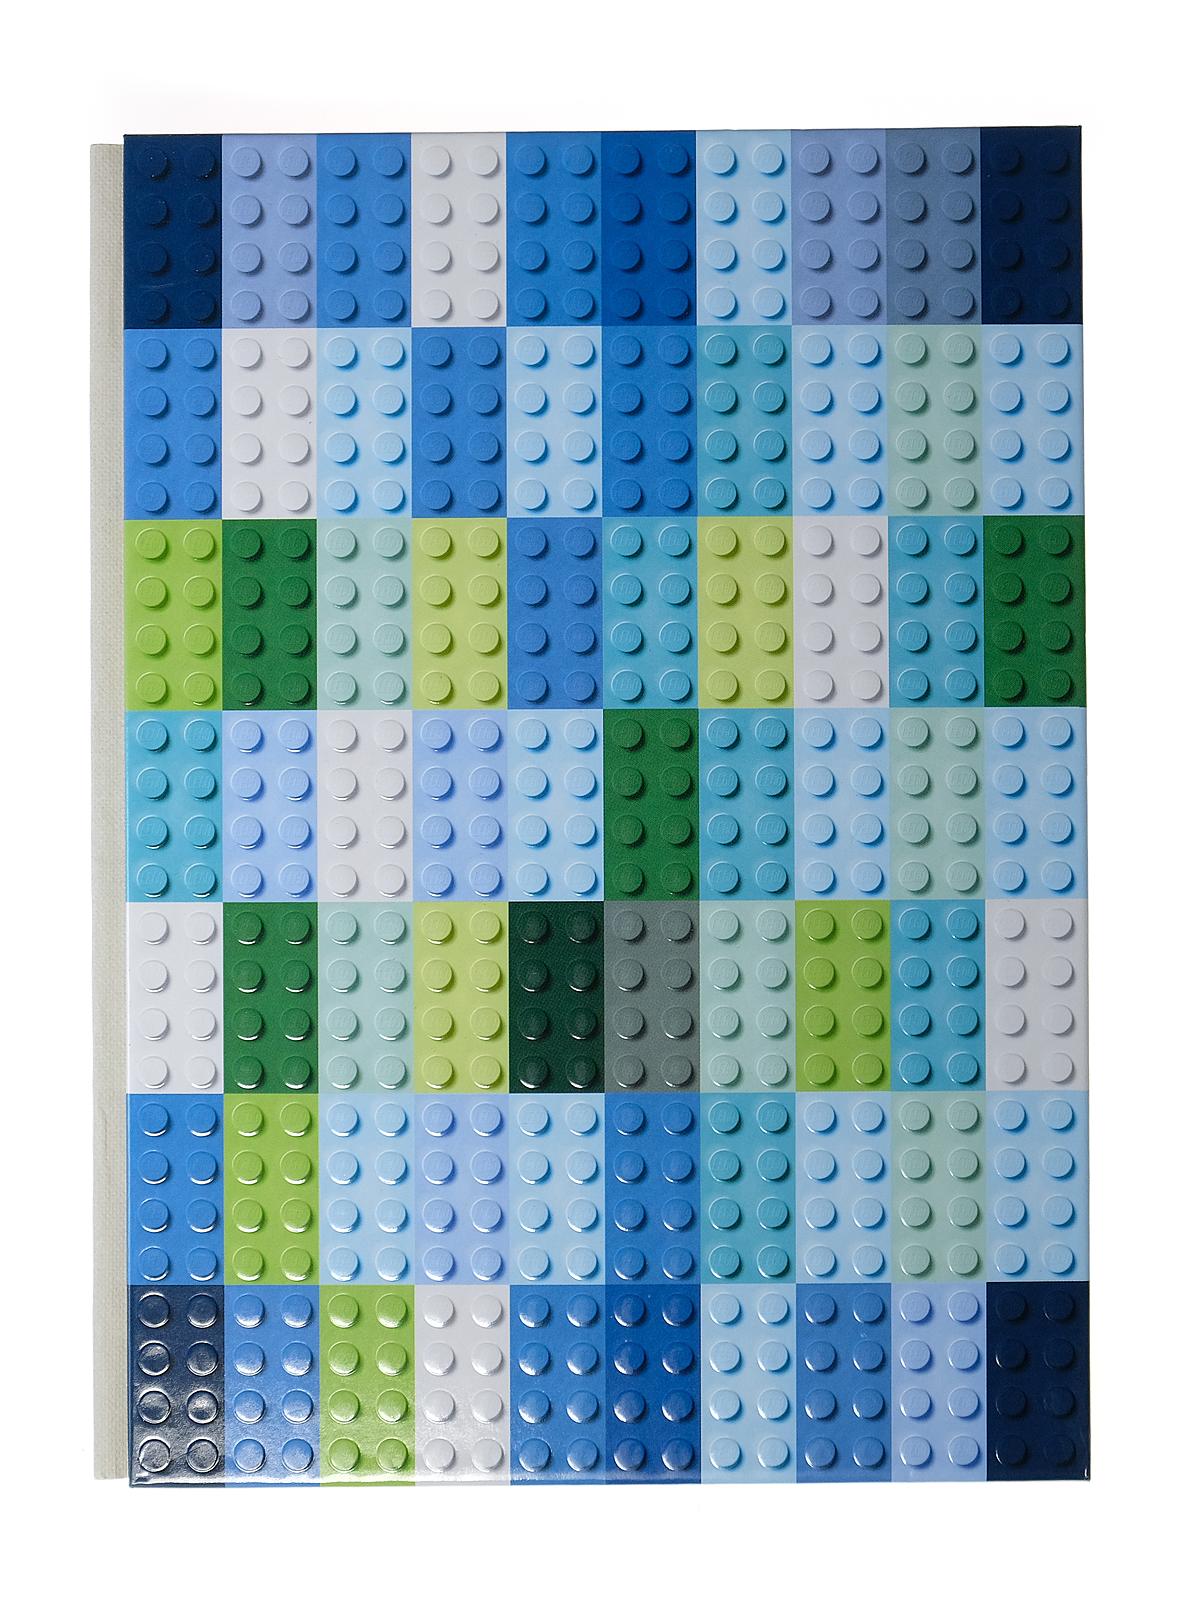 LEGO Brick Notebook Each